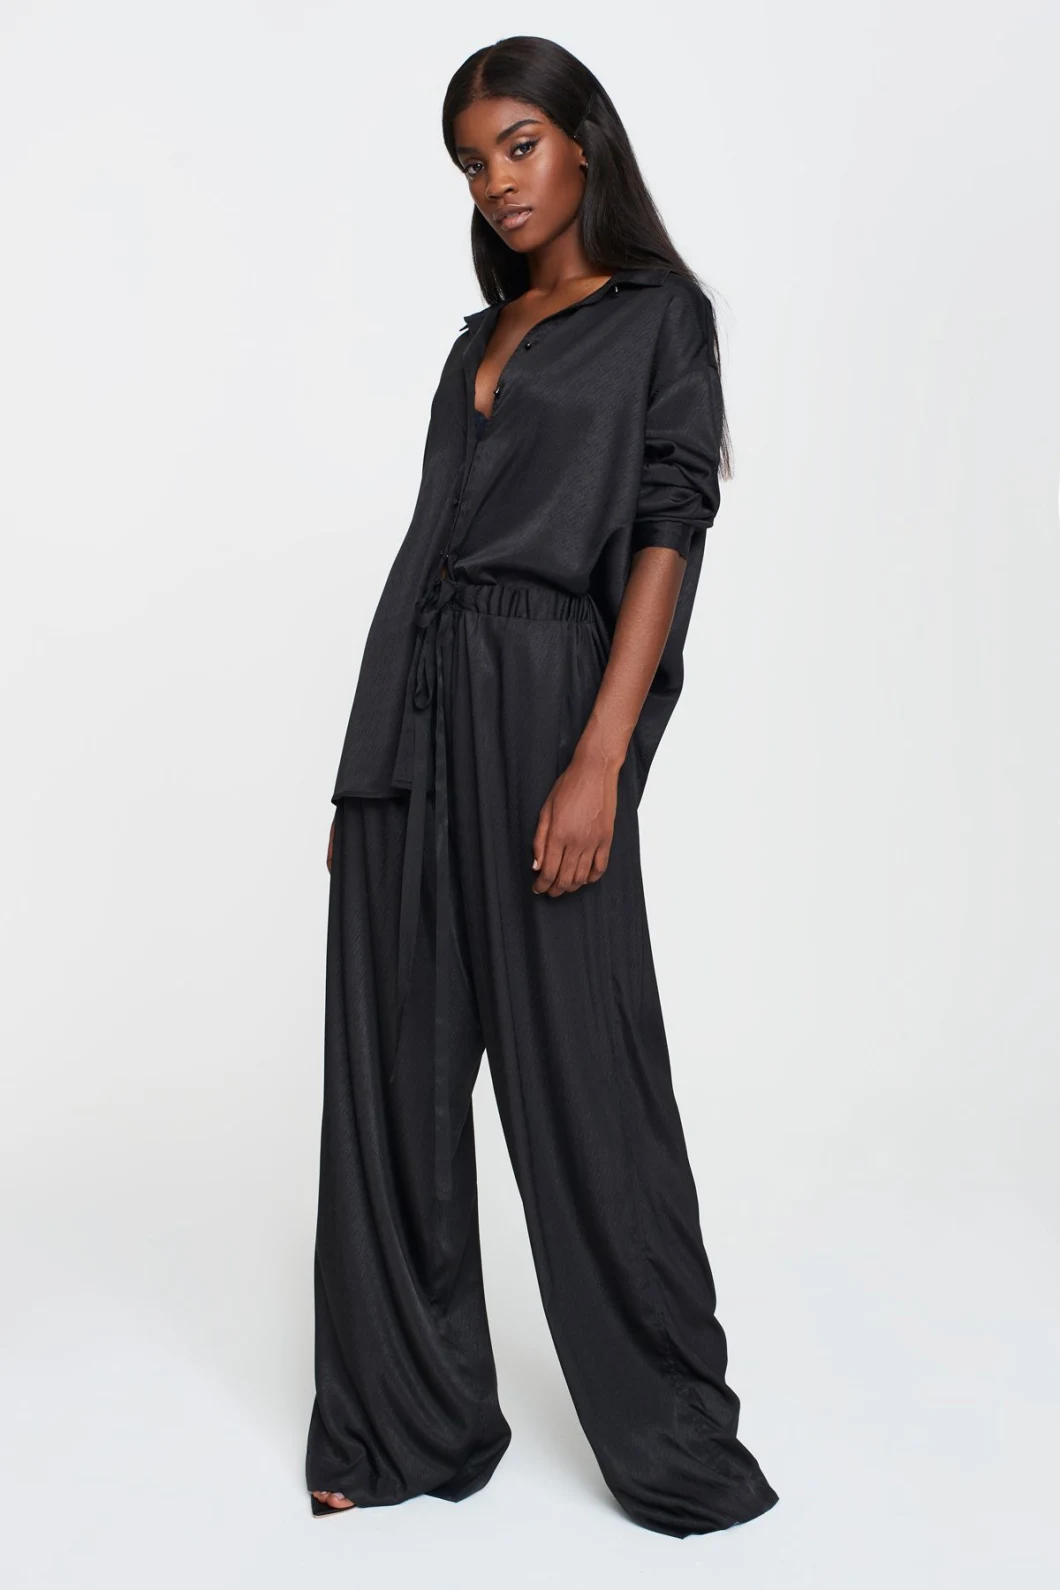 New Apparel Suit Women Fashion Clothing Oversized Satin Pajamas